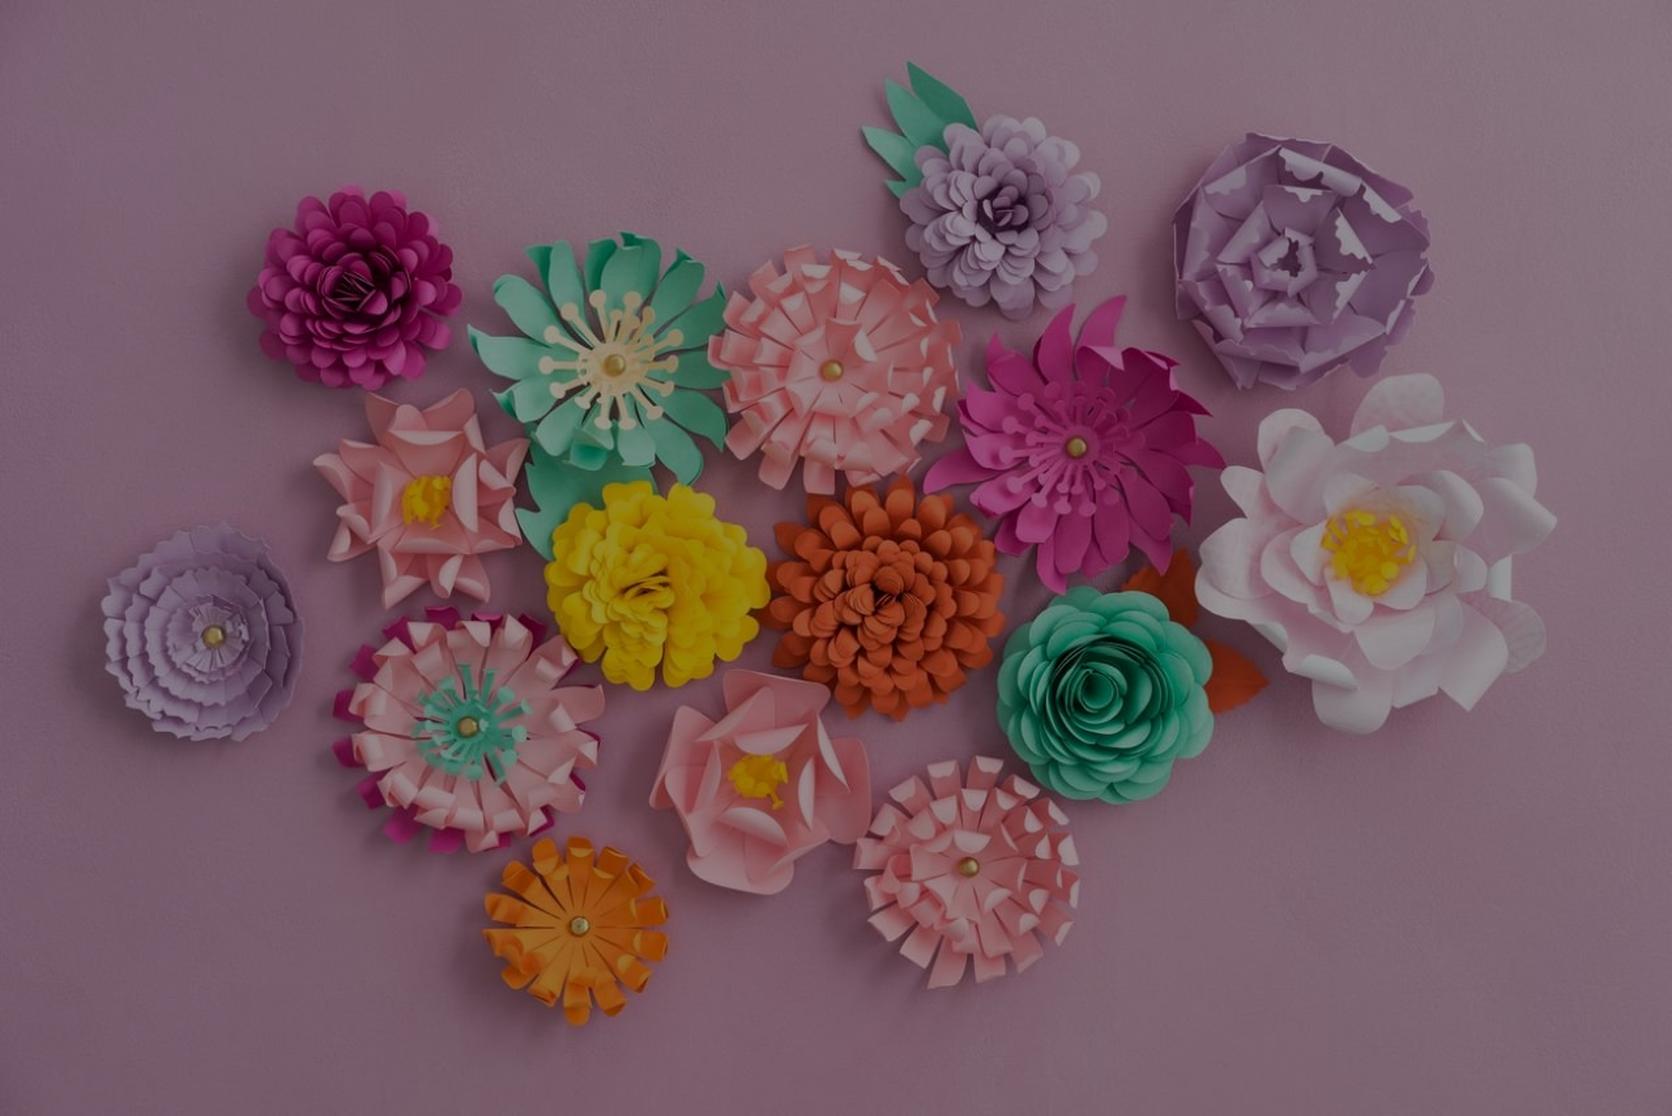 How to Make Crepe-Paper Flowers  Paper flowers diy, Flower diy crafts,  Paper flowers